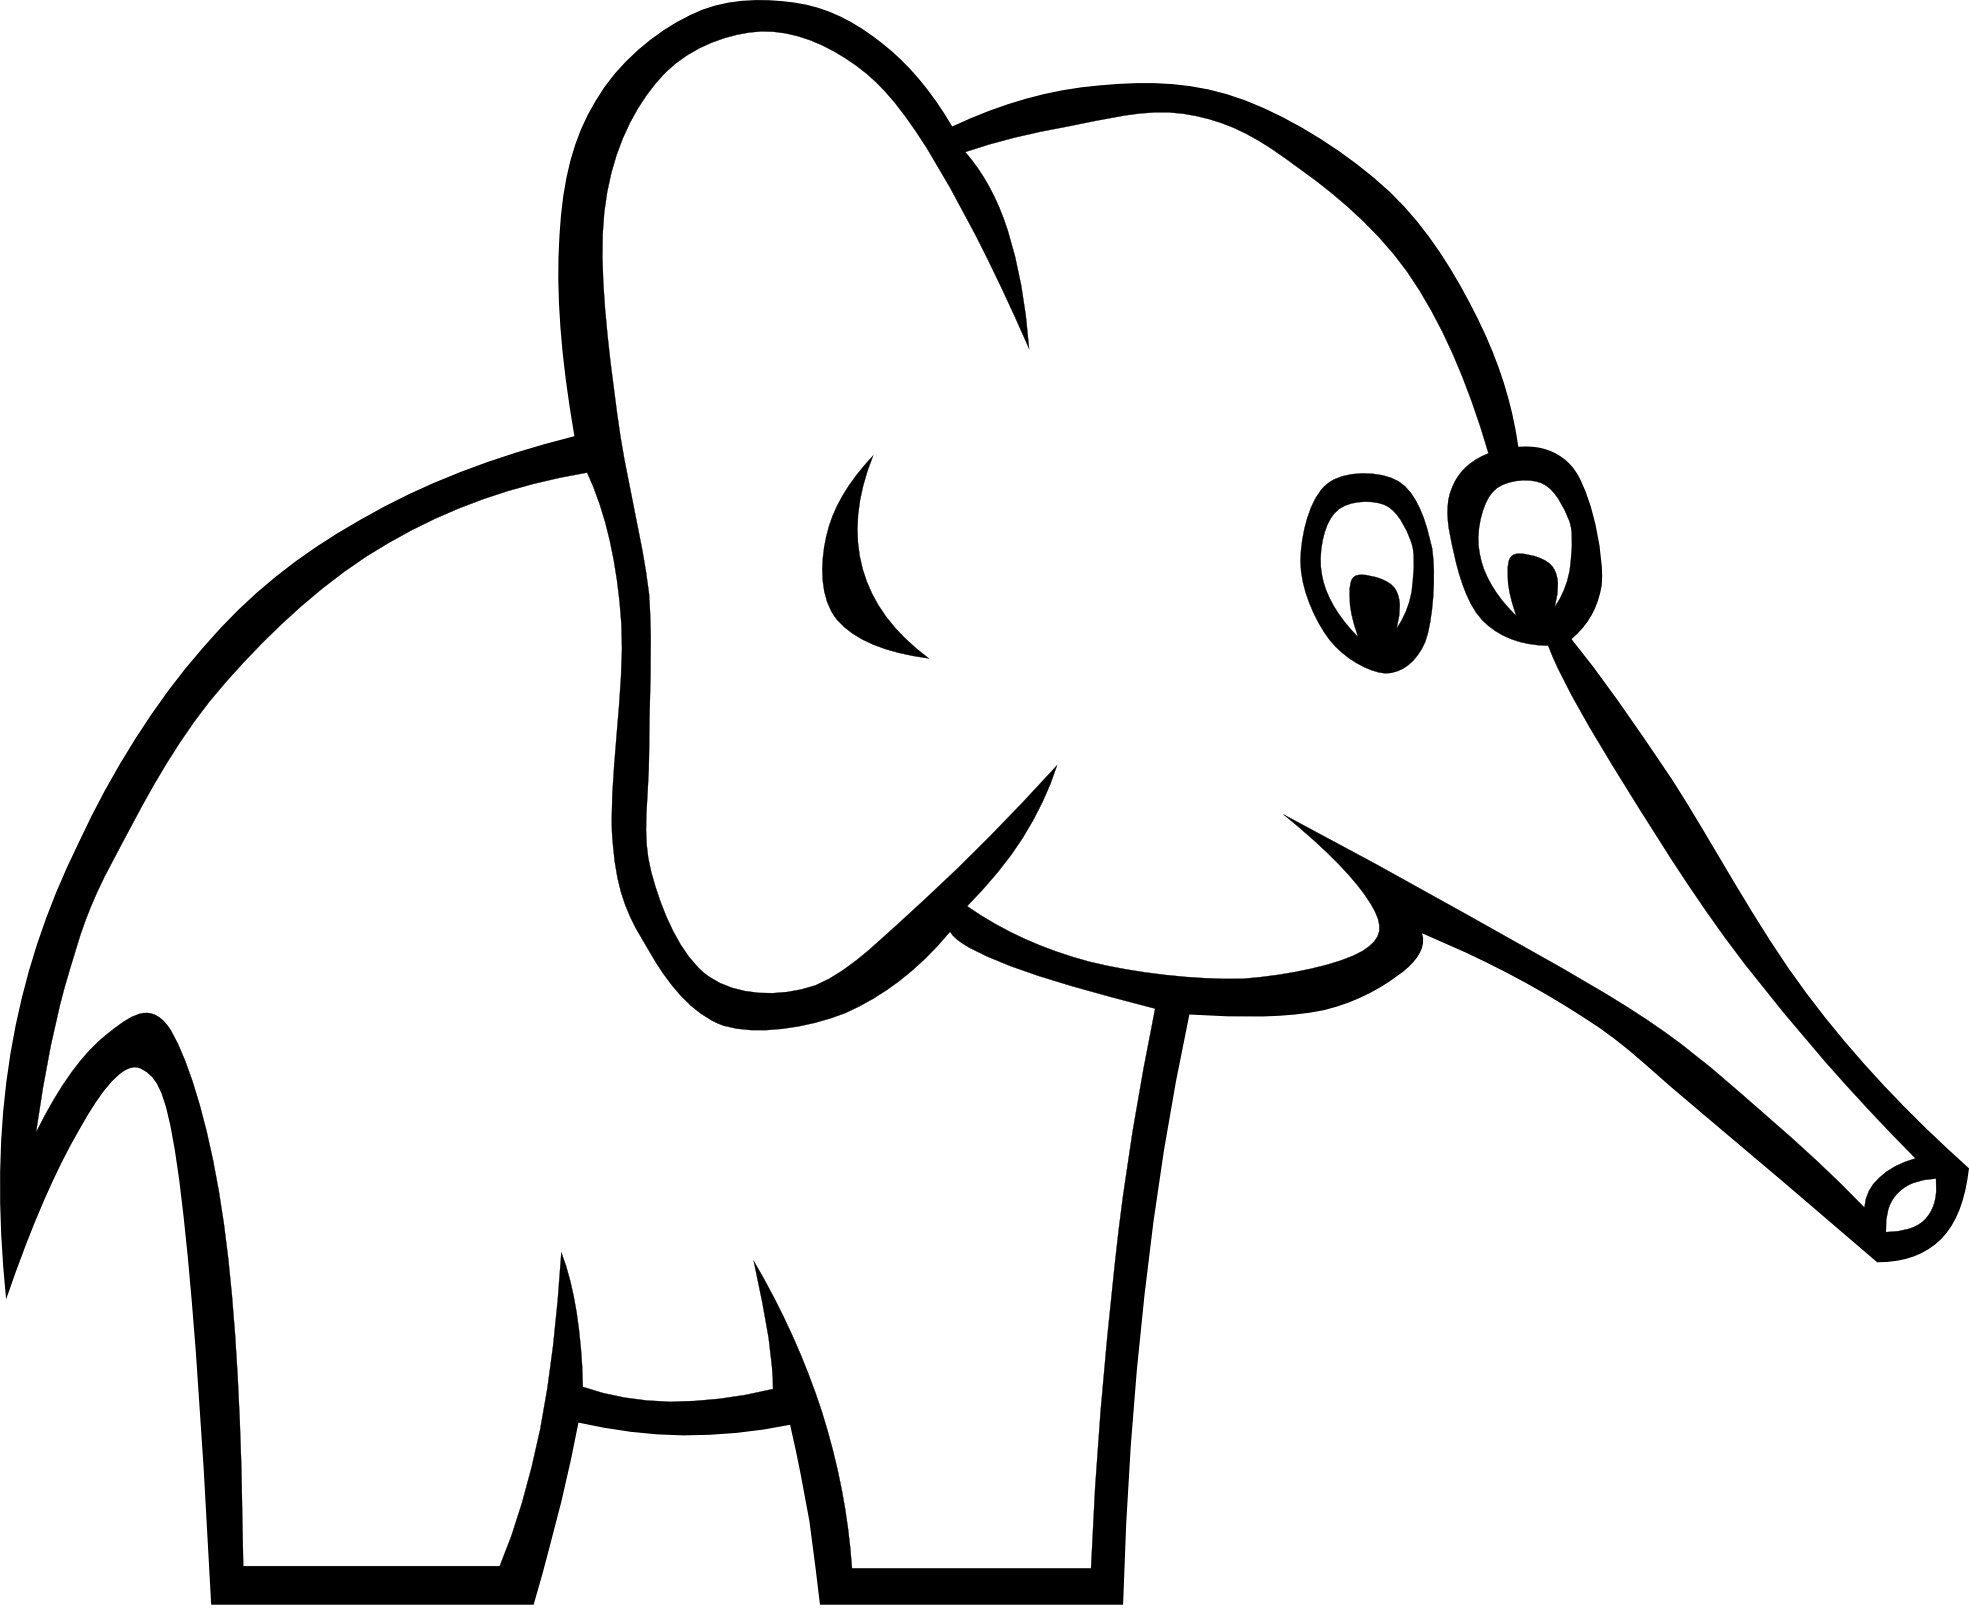 Black and White Elephant Logo - Free Black And White Elephants, Download Free Clip Art, Free Clip ...